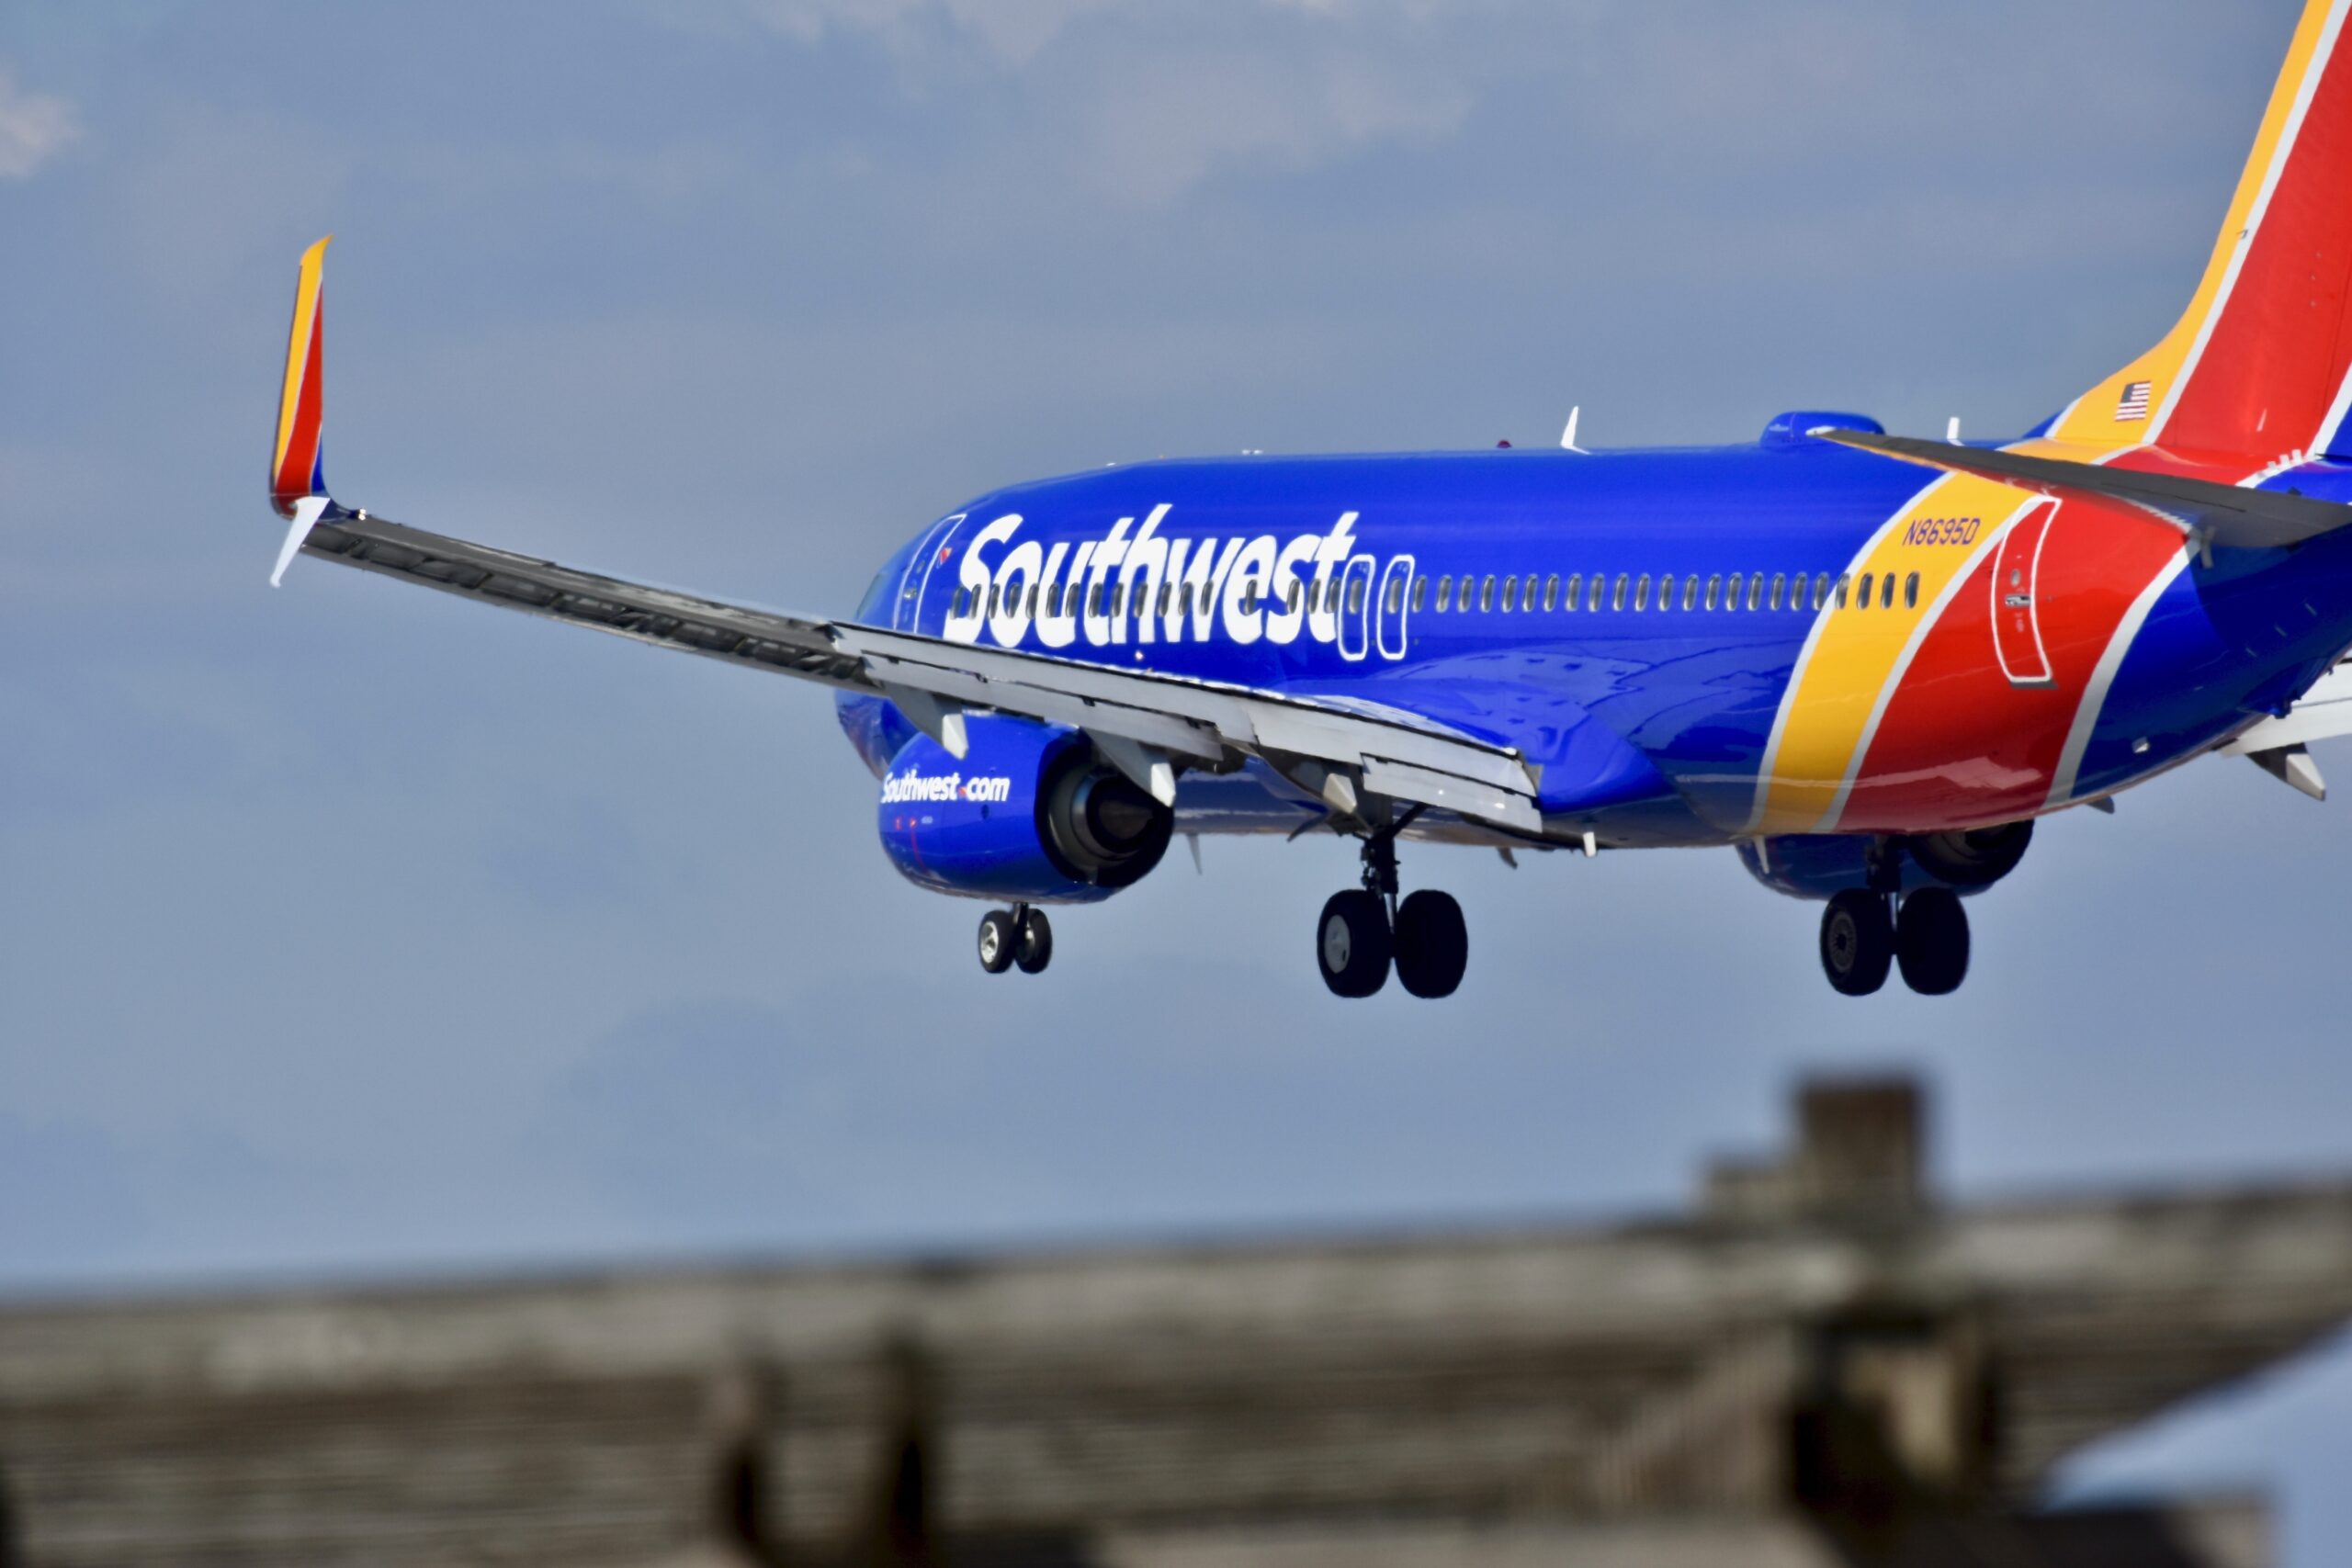 travel reimbursement southwest airlines